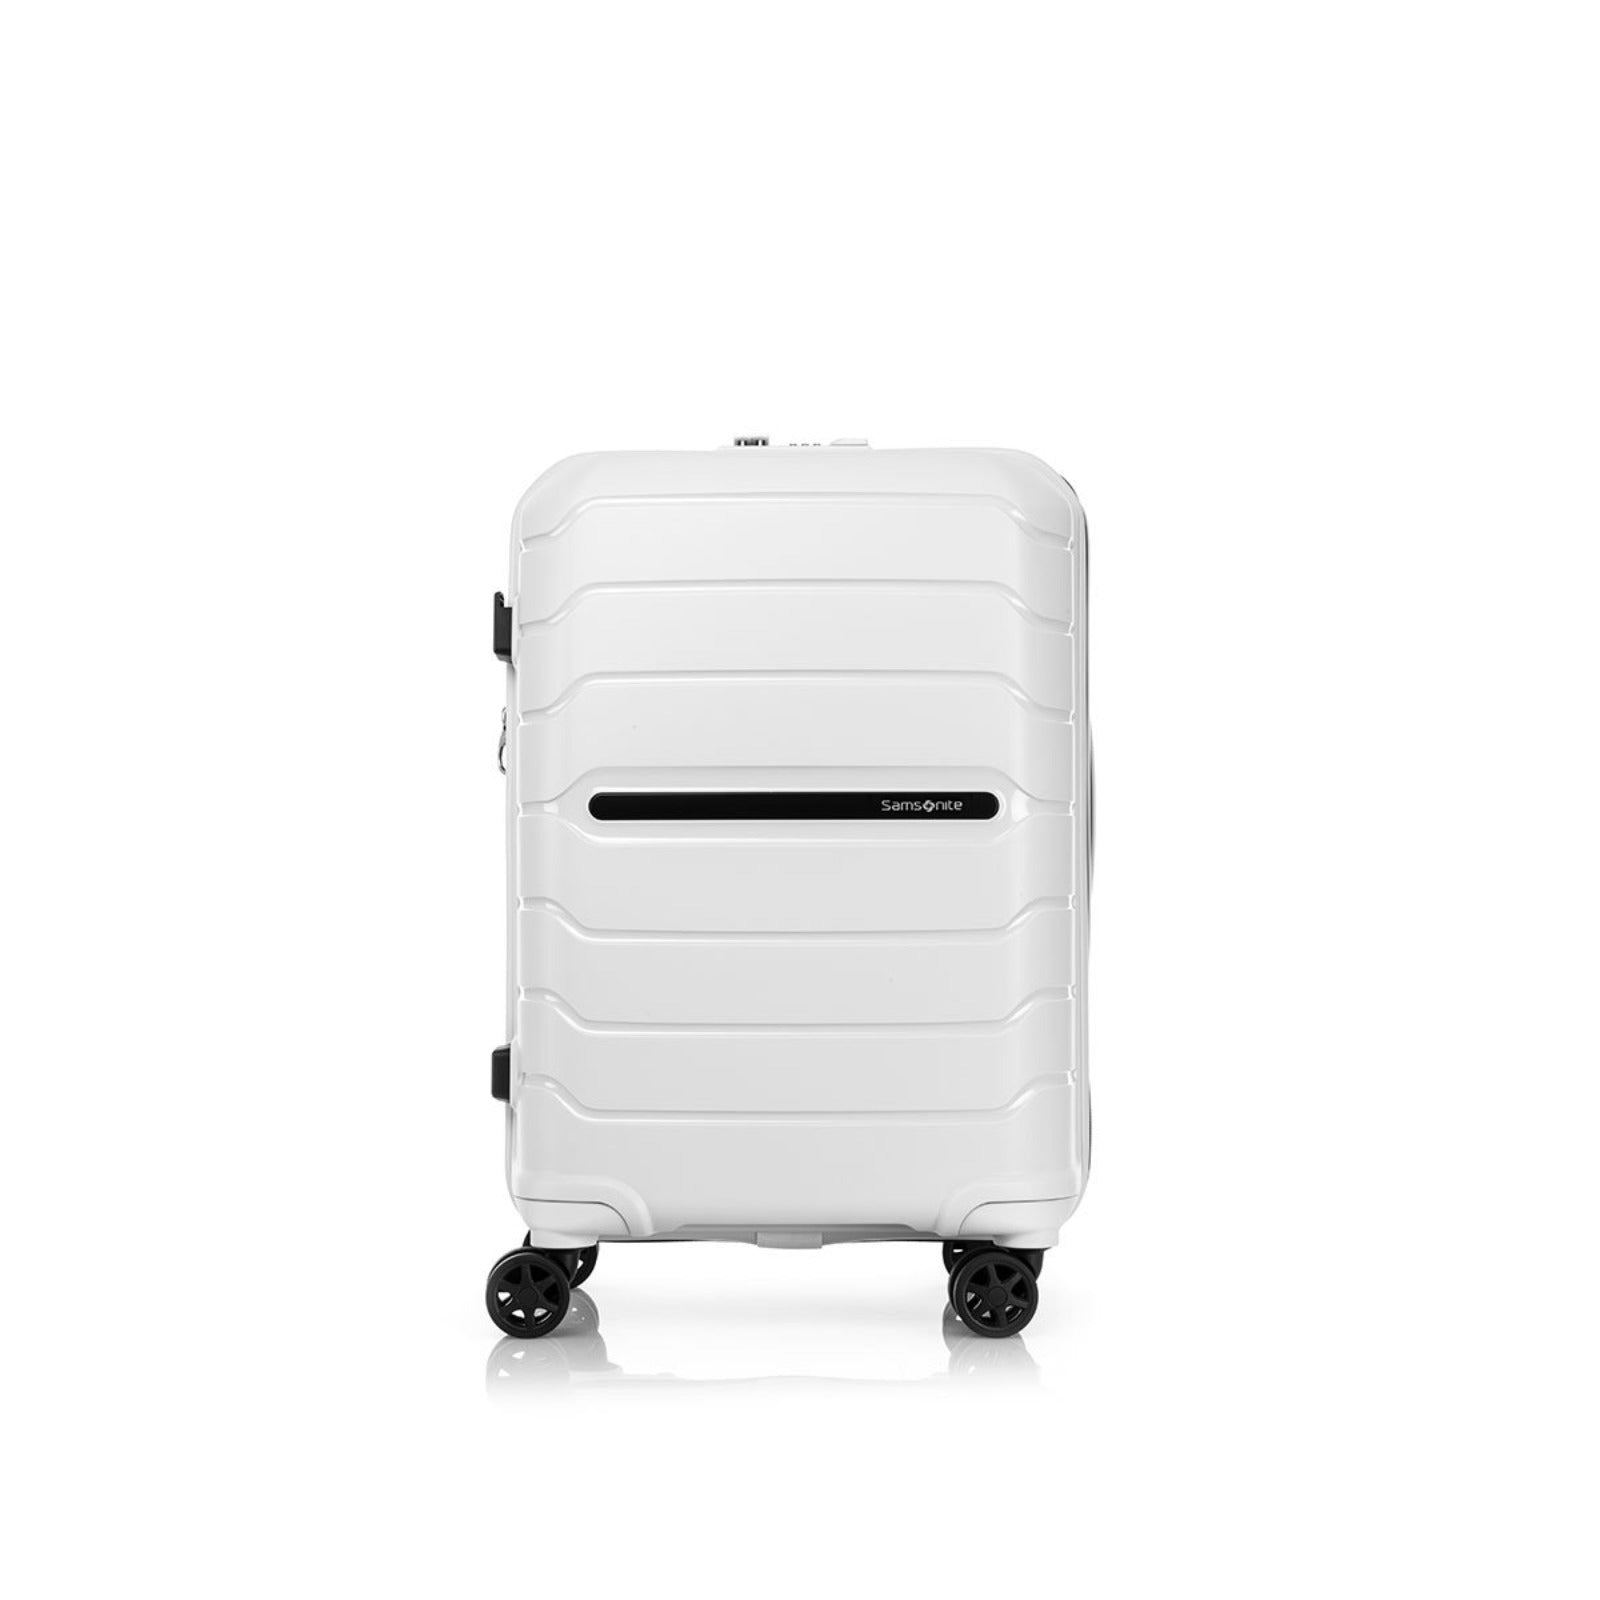 Samsonite_Oc2lite_55cm_Carry-On_Suitcase_Off_White_Face